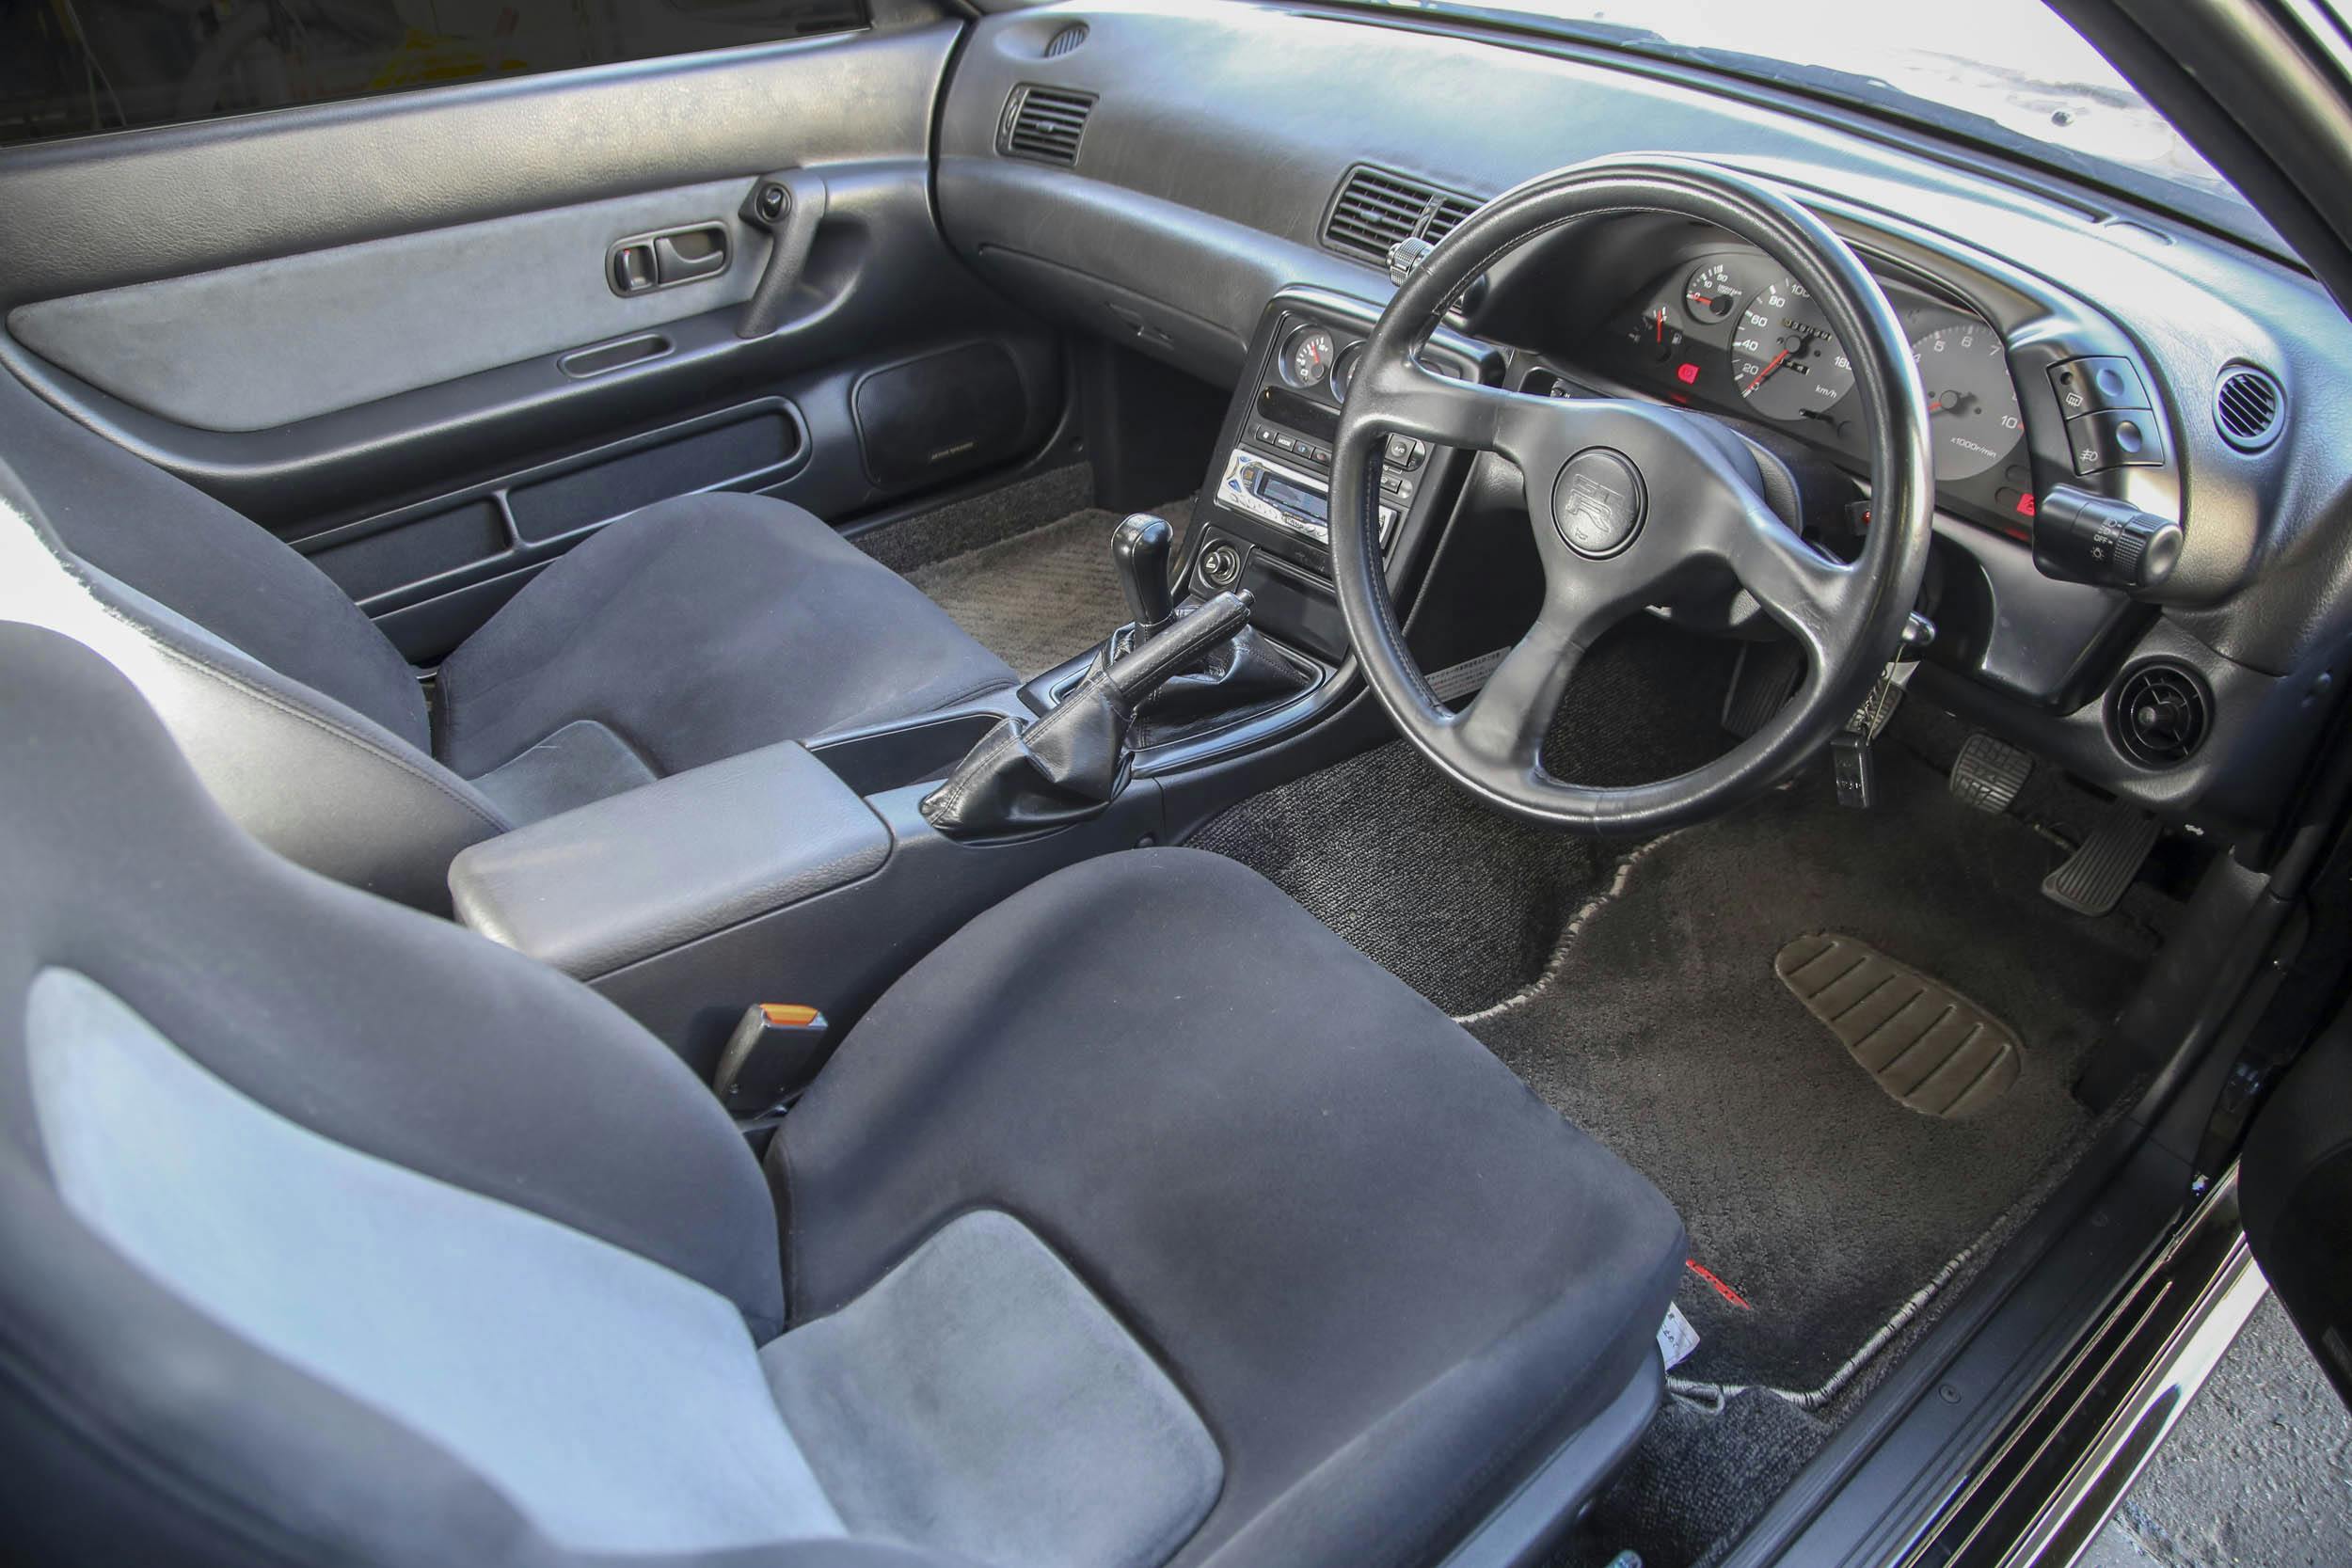 R32 Nissan GT-R toprank 3 interior